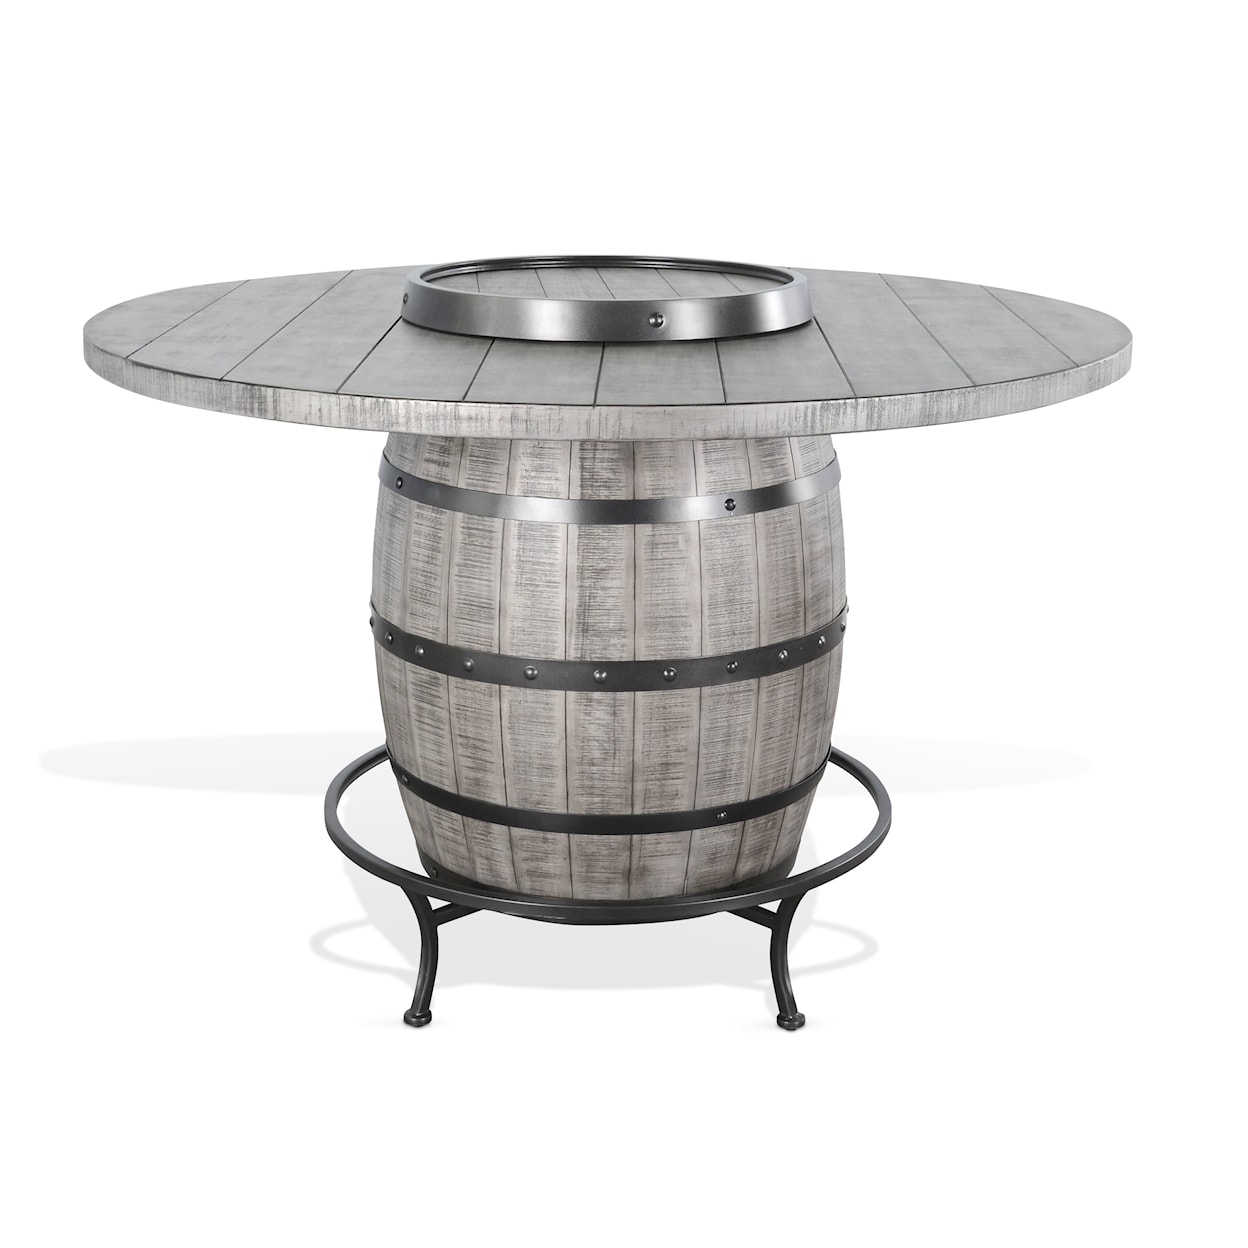 Sunny Designs Alpine Grey Round Pub Table with Wine Barrel Base